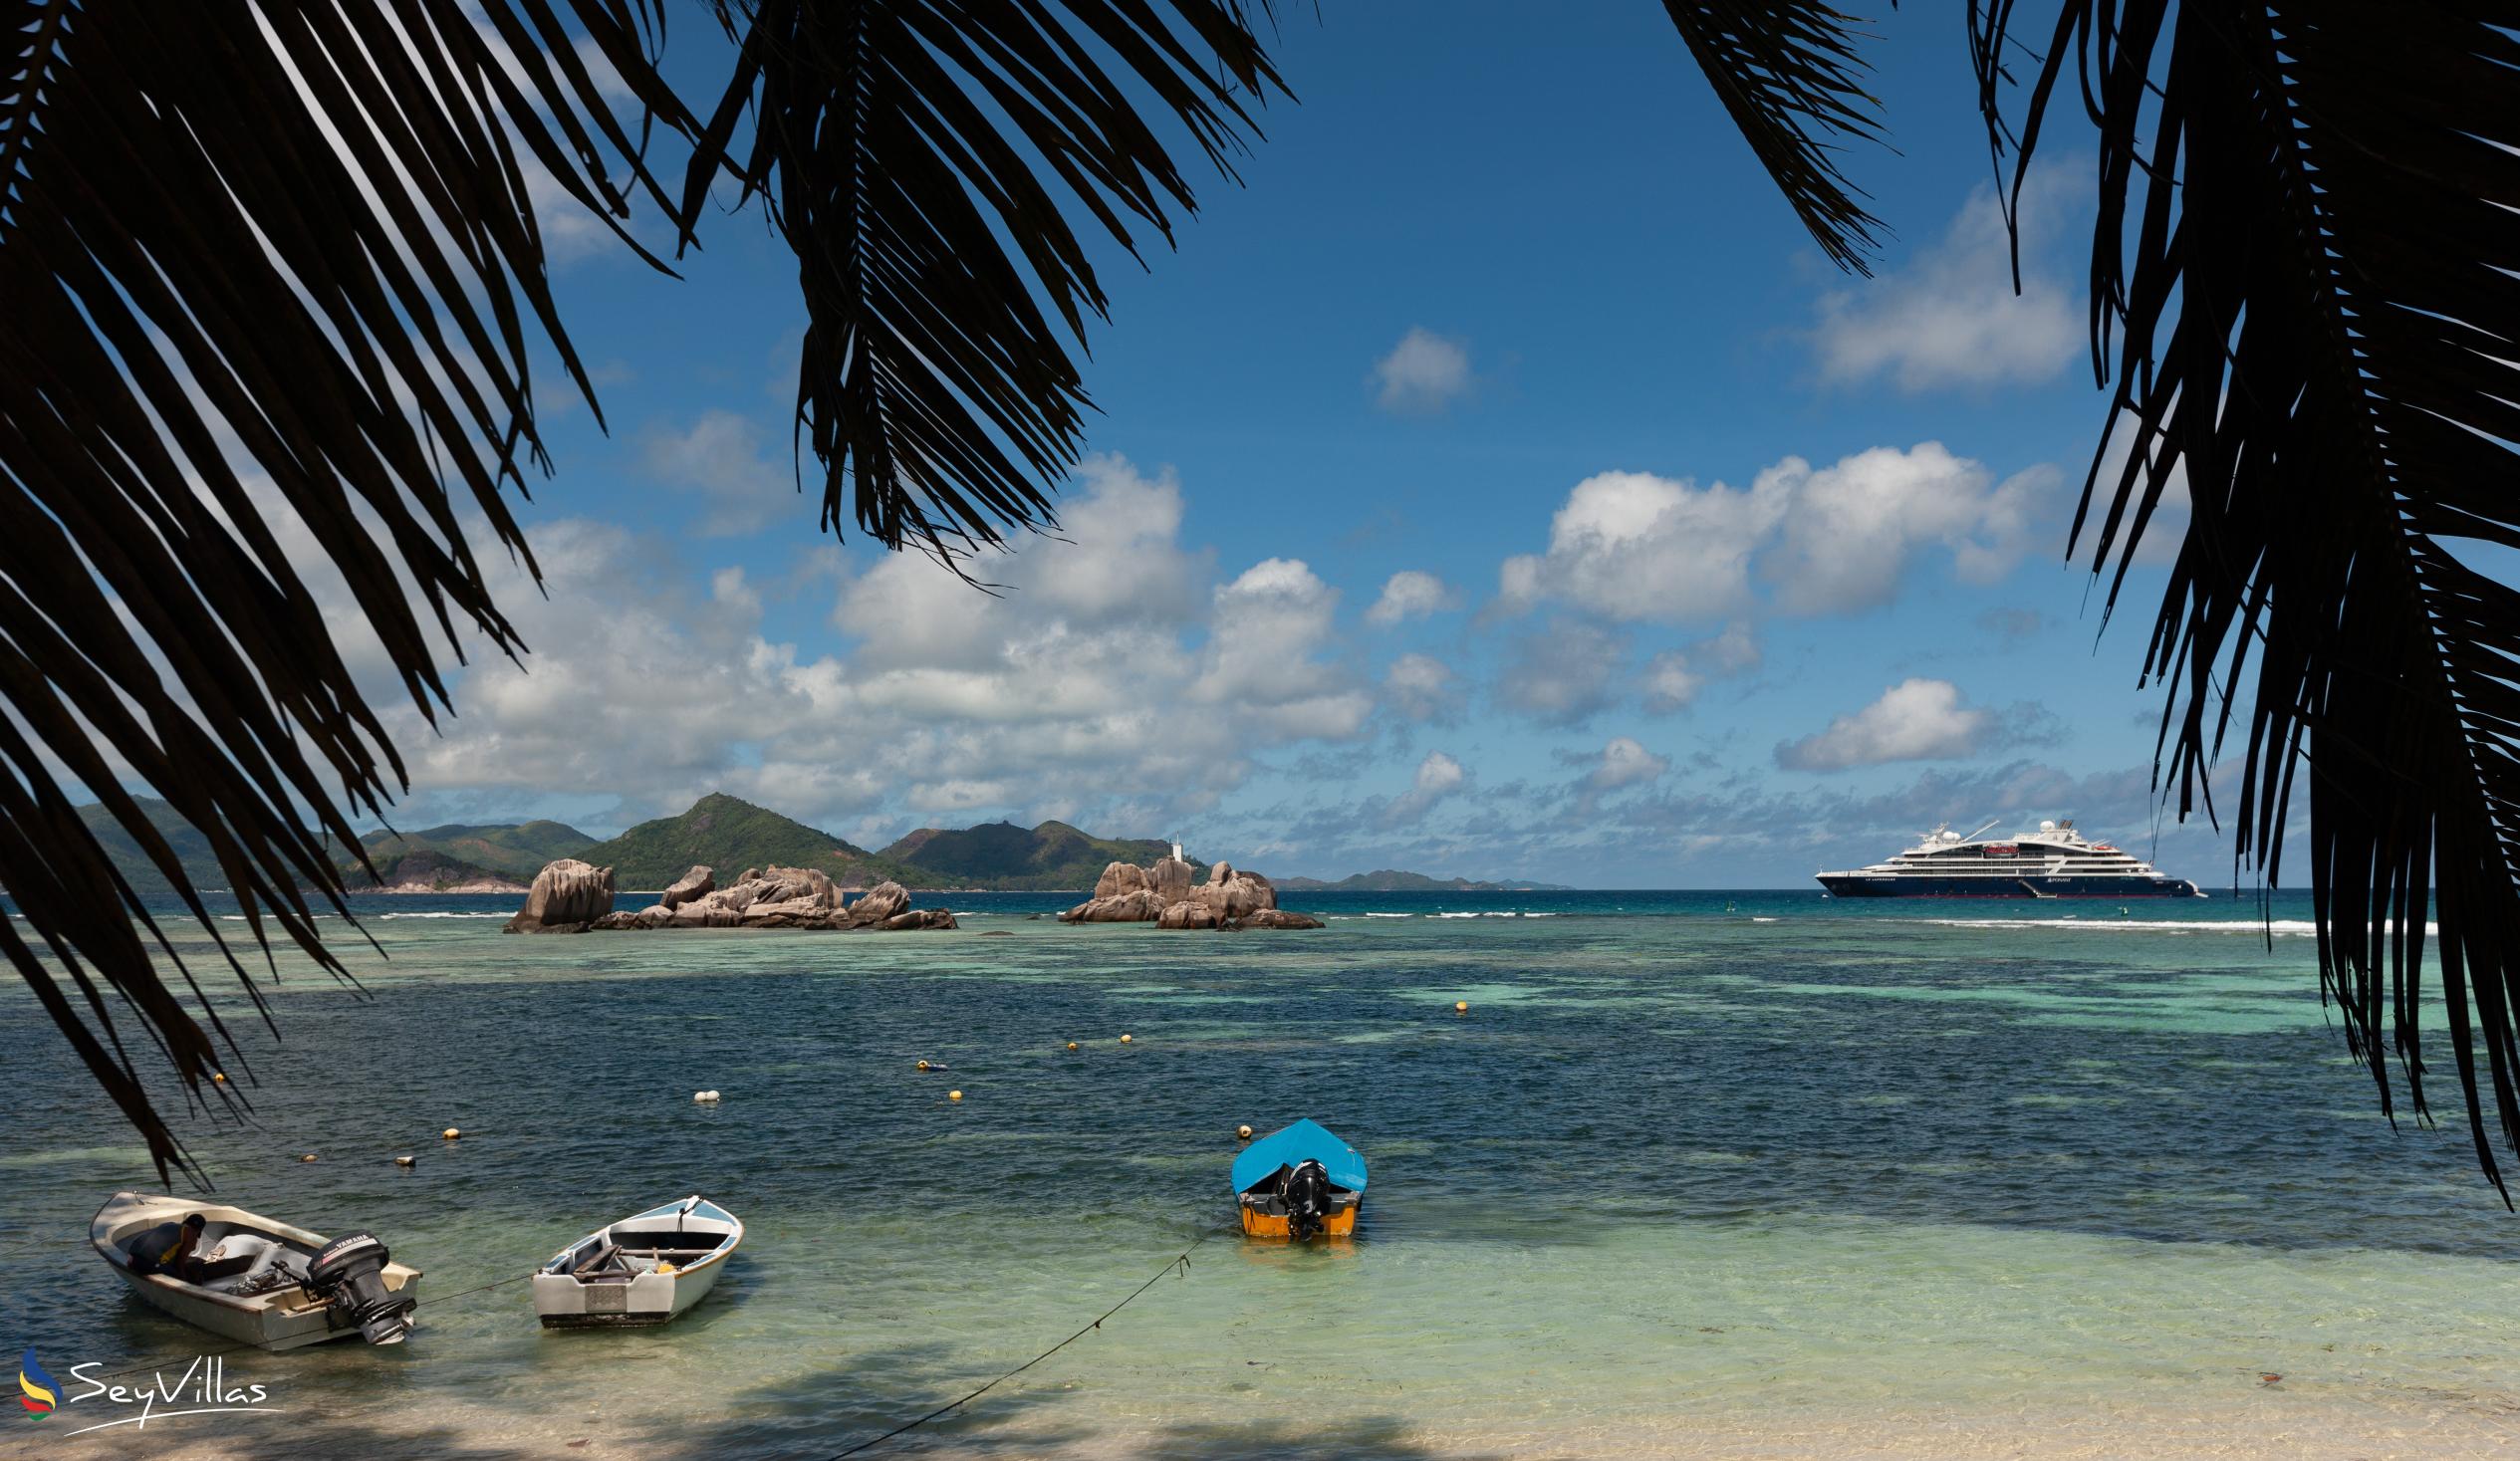 Photo 12: MT Seaside Apartments - Location - La Digue (Seychelles)